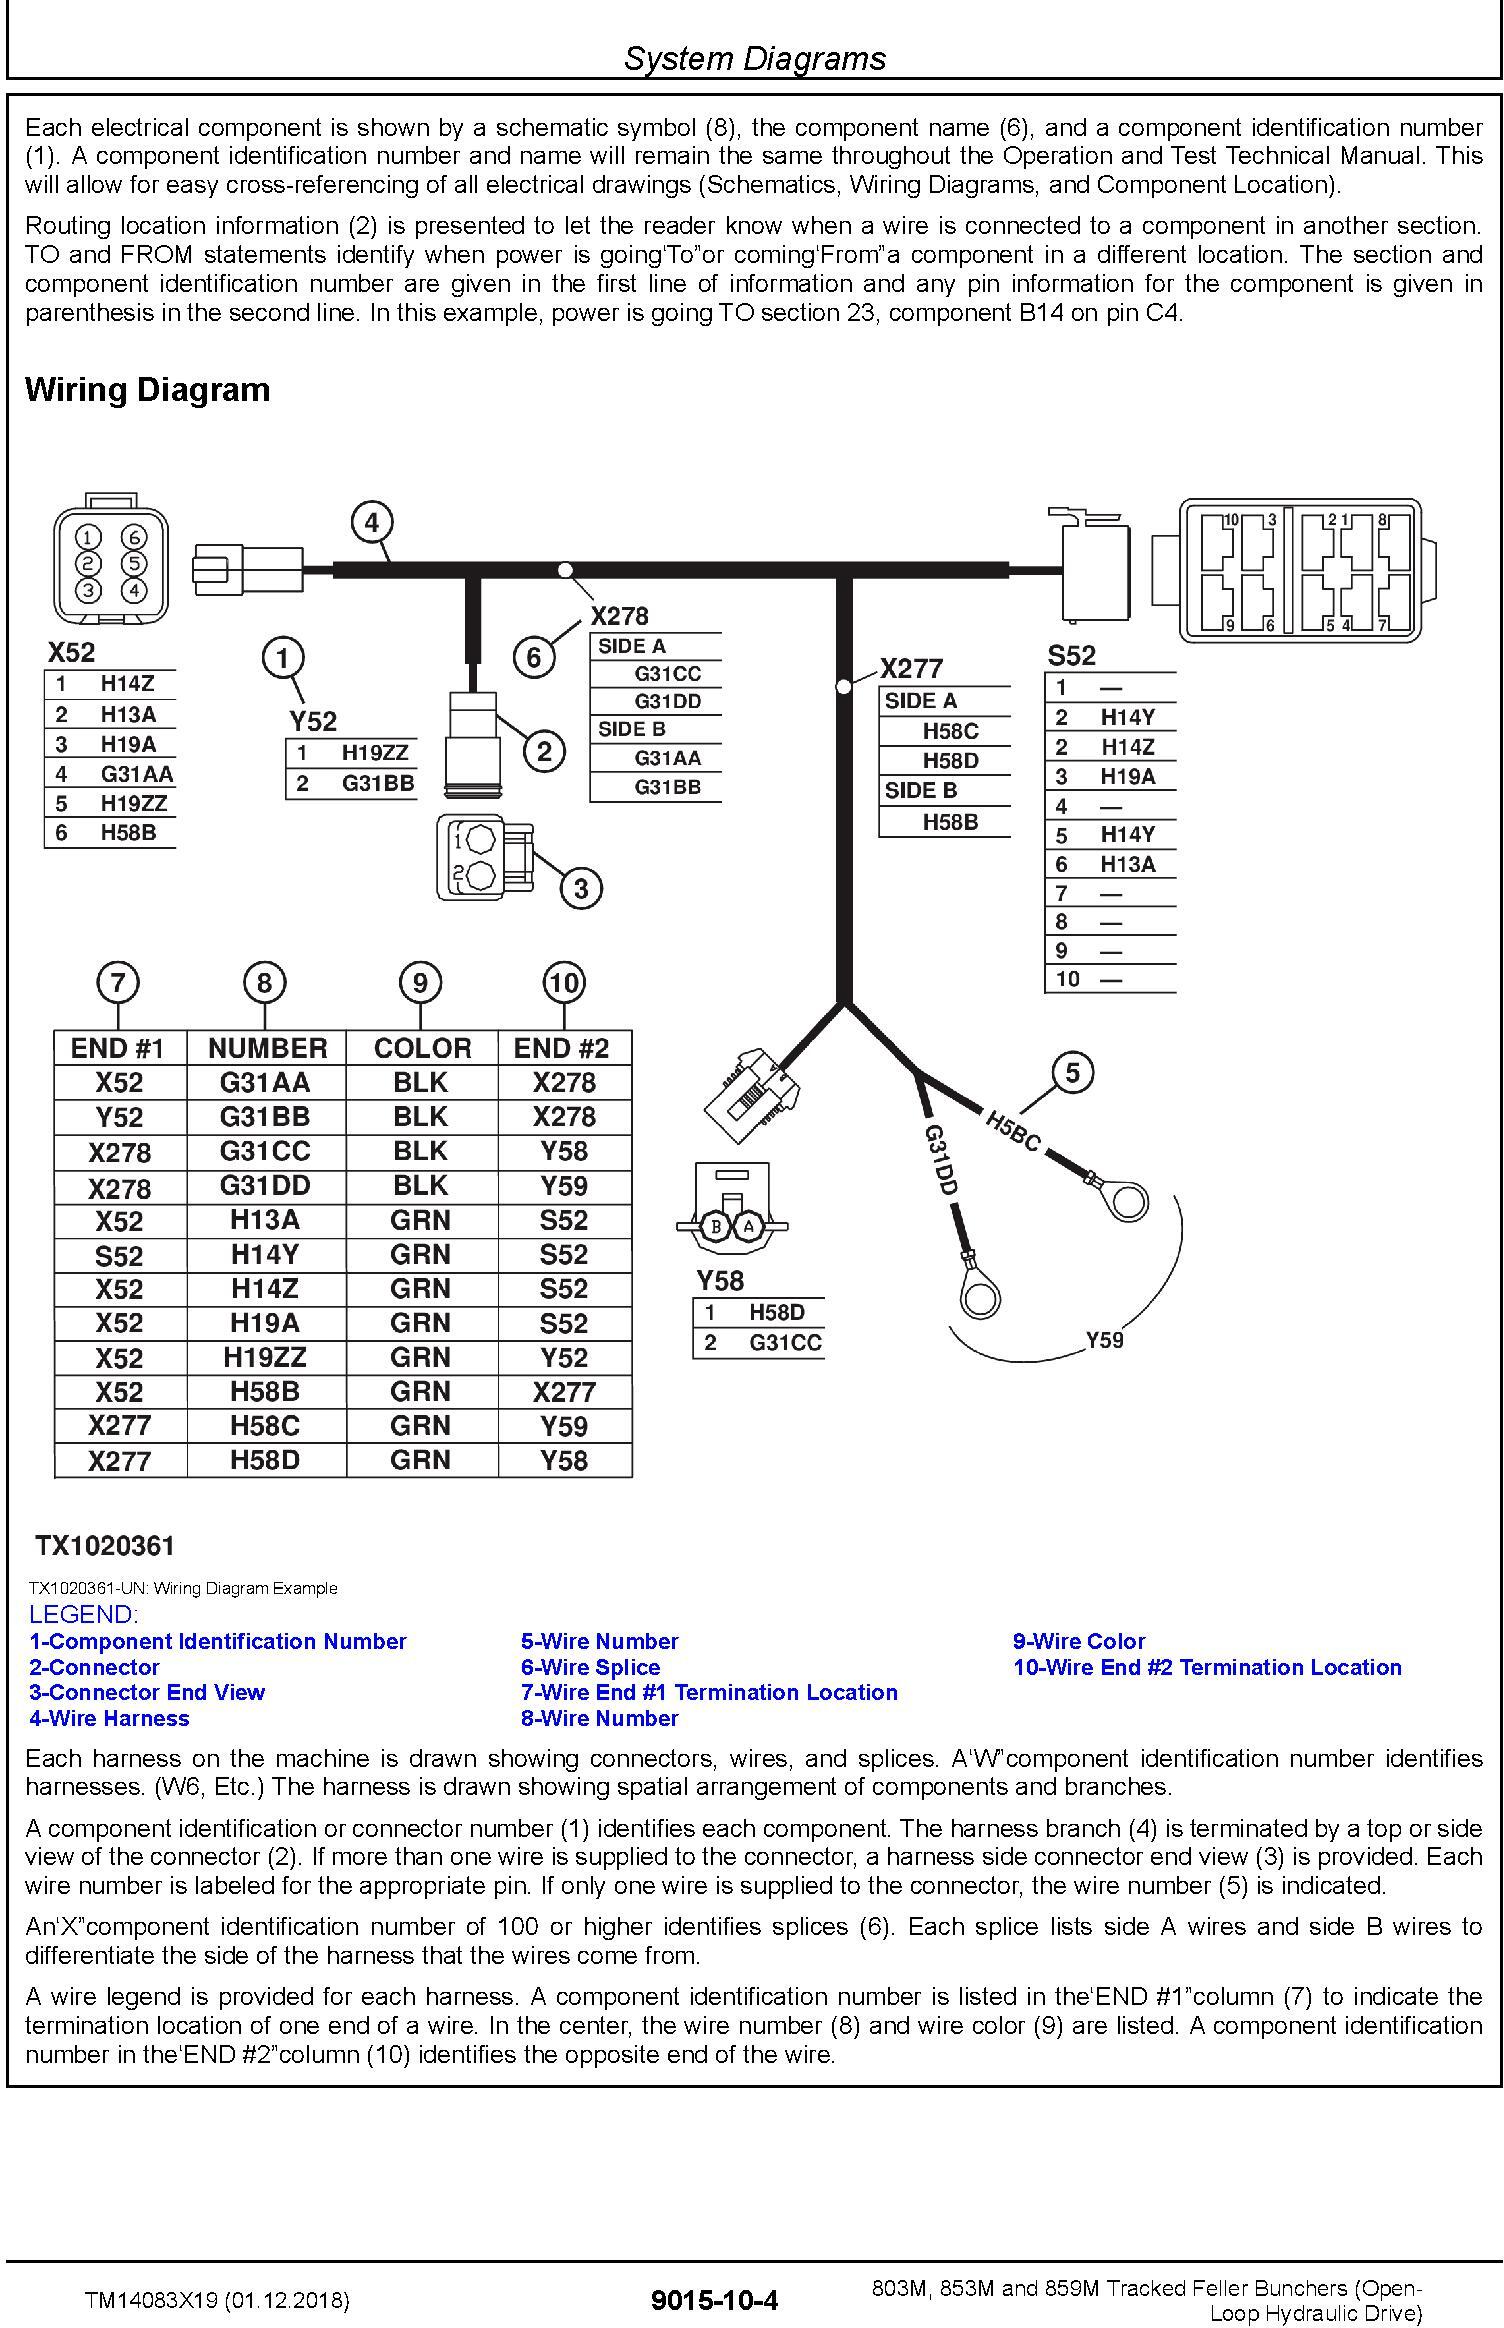 John Deere 803M,853M (SN.F293917-,L343918-) Feller Bunchers (Open-Loop) Diagnostic Manual TM14083X19 - 1